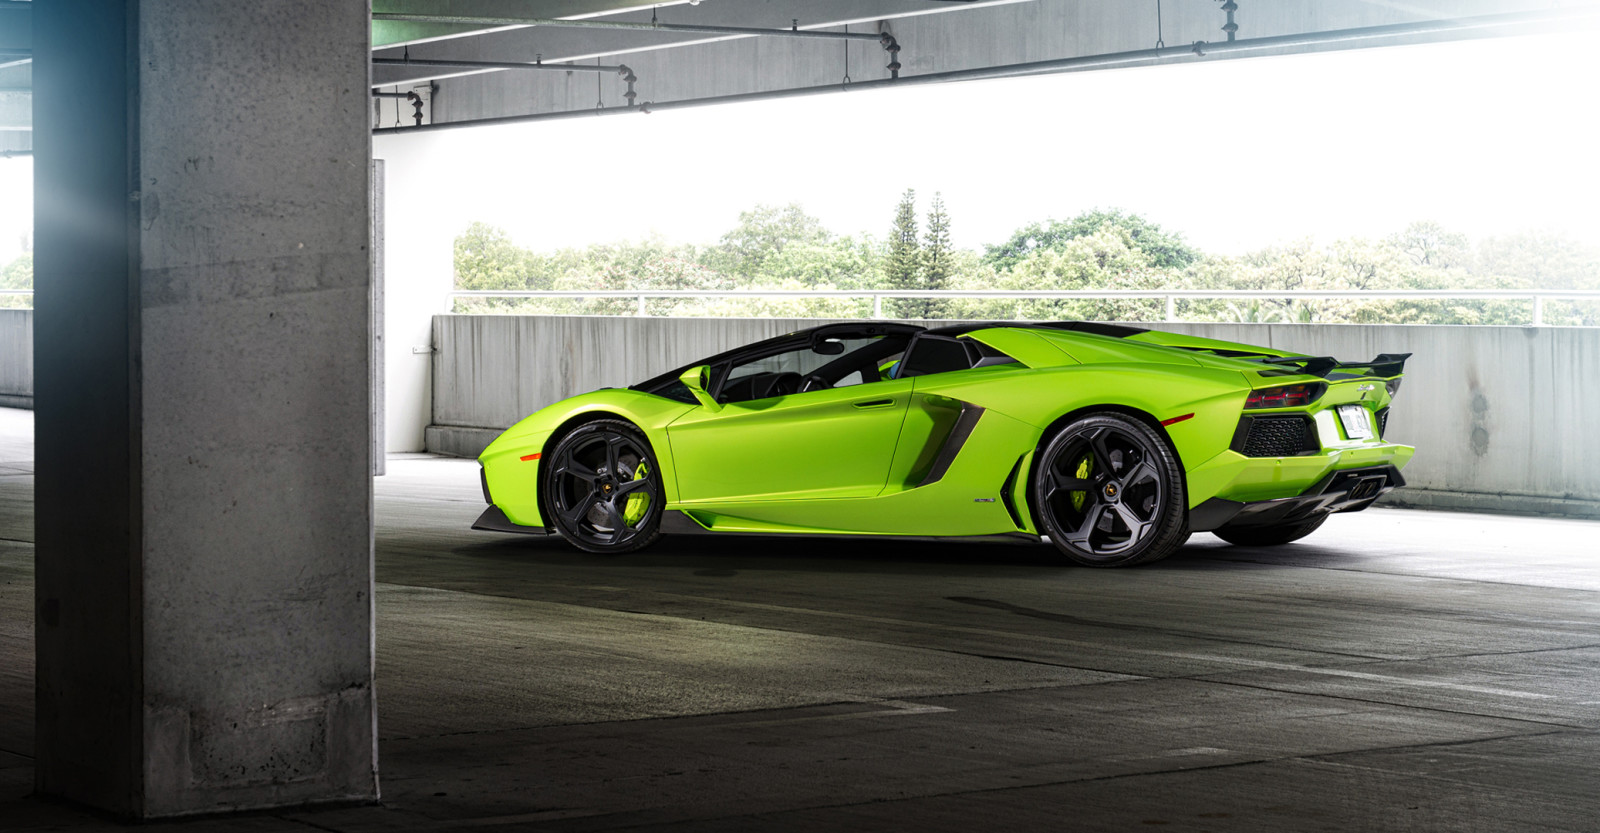 Lamborghini, supercar, Aventador, รถกูบ, สีเขียว, รถยนต์เปิดประทน, 2015, LP-700-4